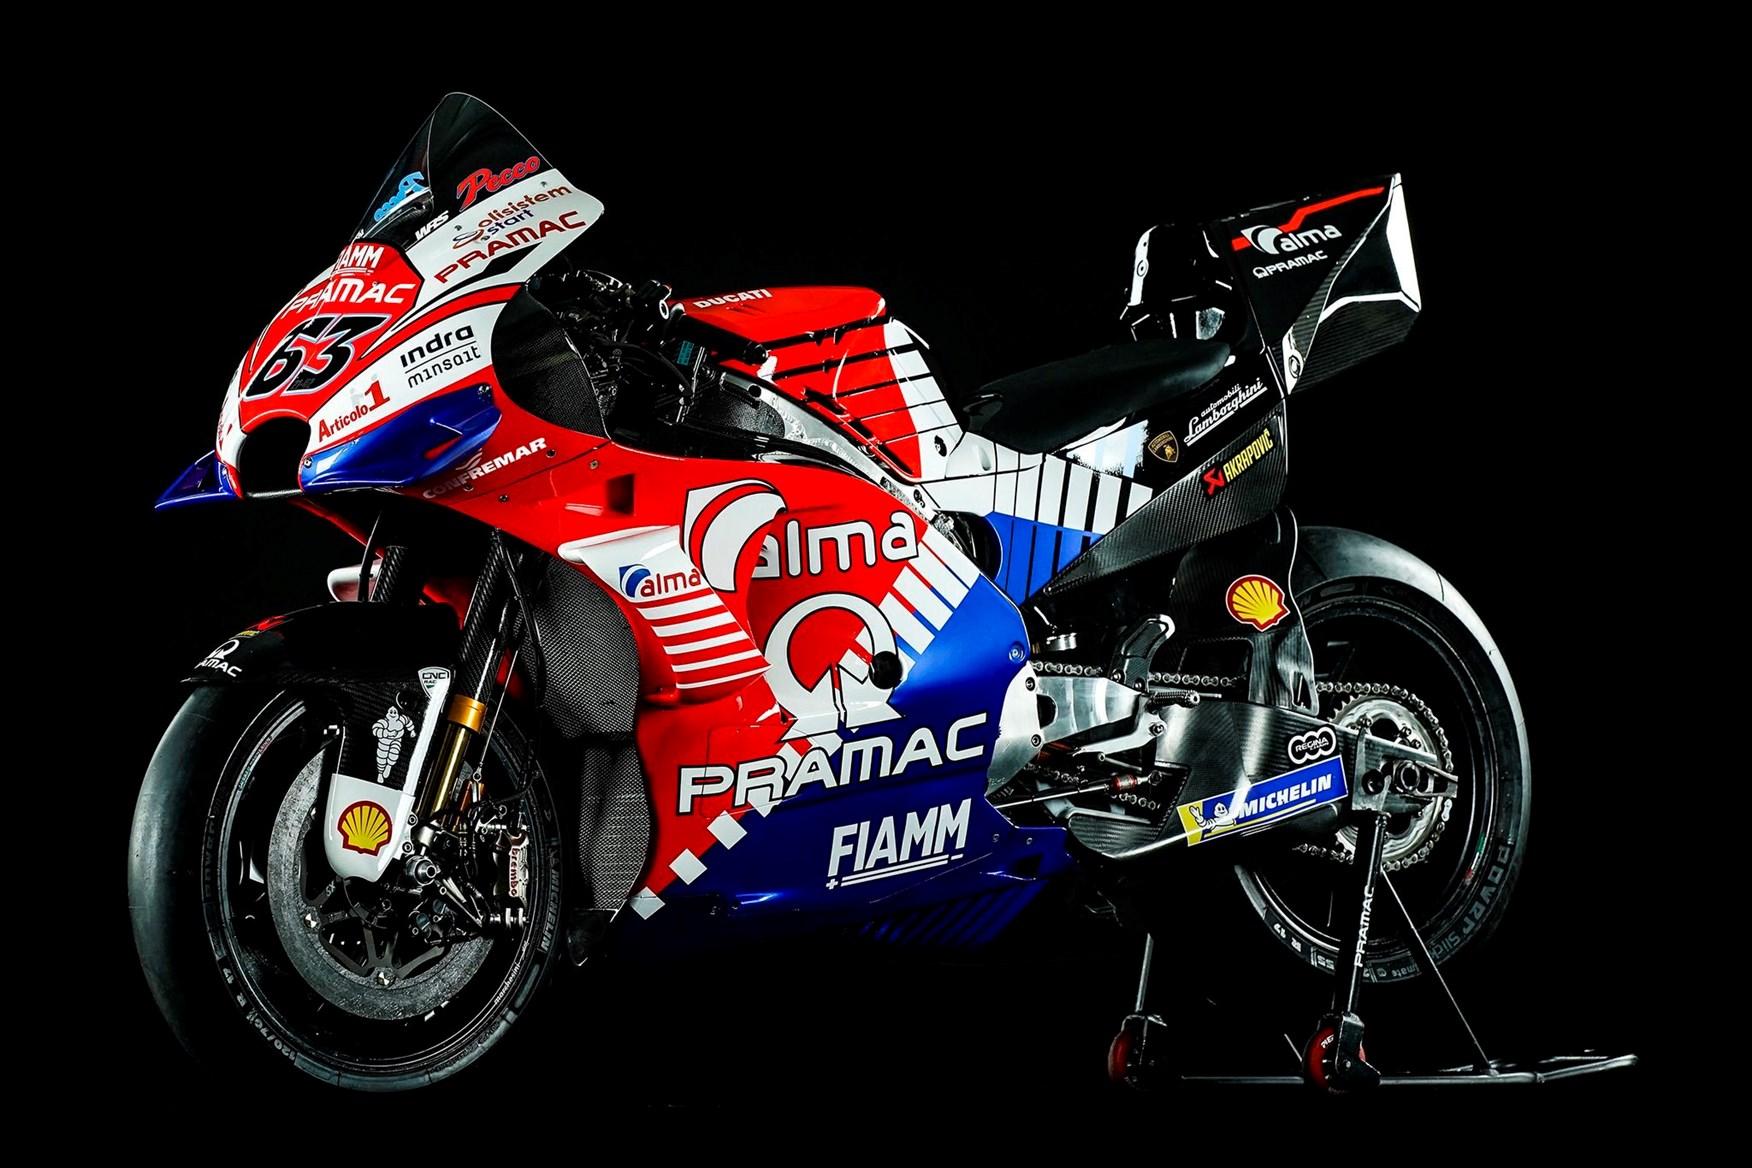 MotoGP: Pramac the last team to show off 2019 liveries